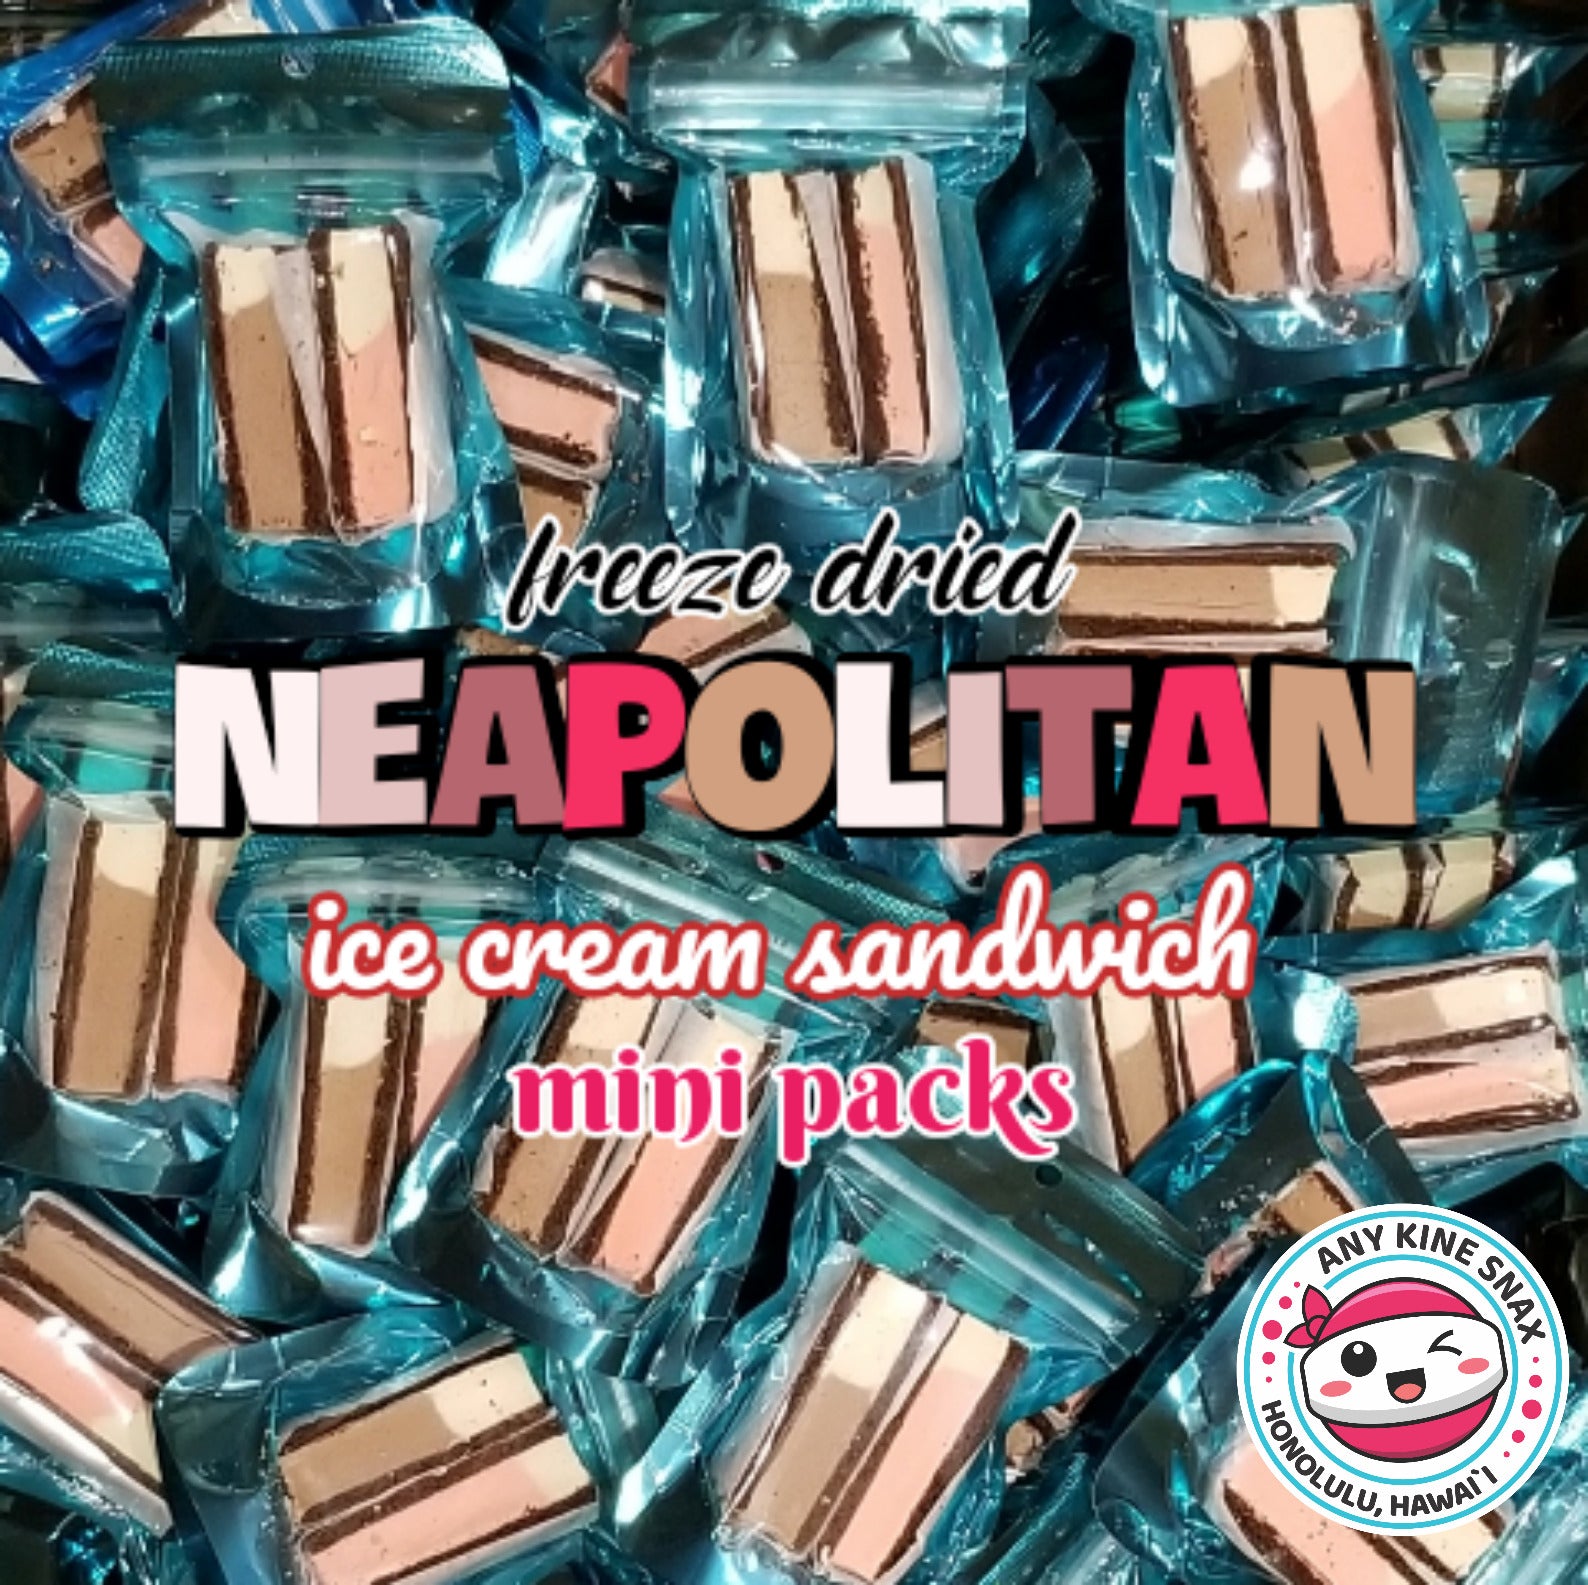 Pop-Up Mākeke - Any Kine Snax - Freeze Dried Ice Cream Sandwich Mini Packs (half) - Neapolitan